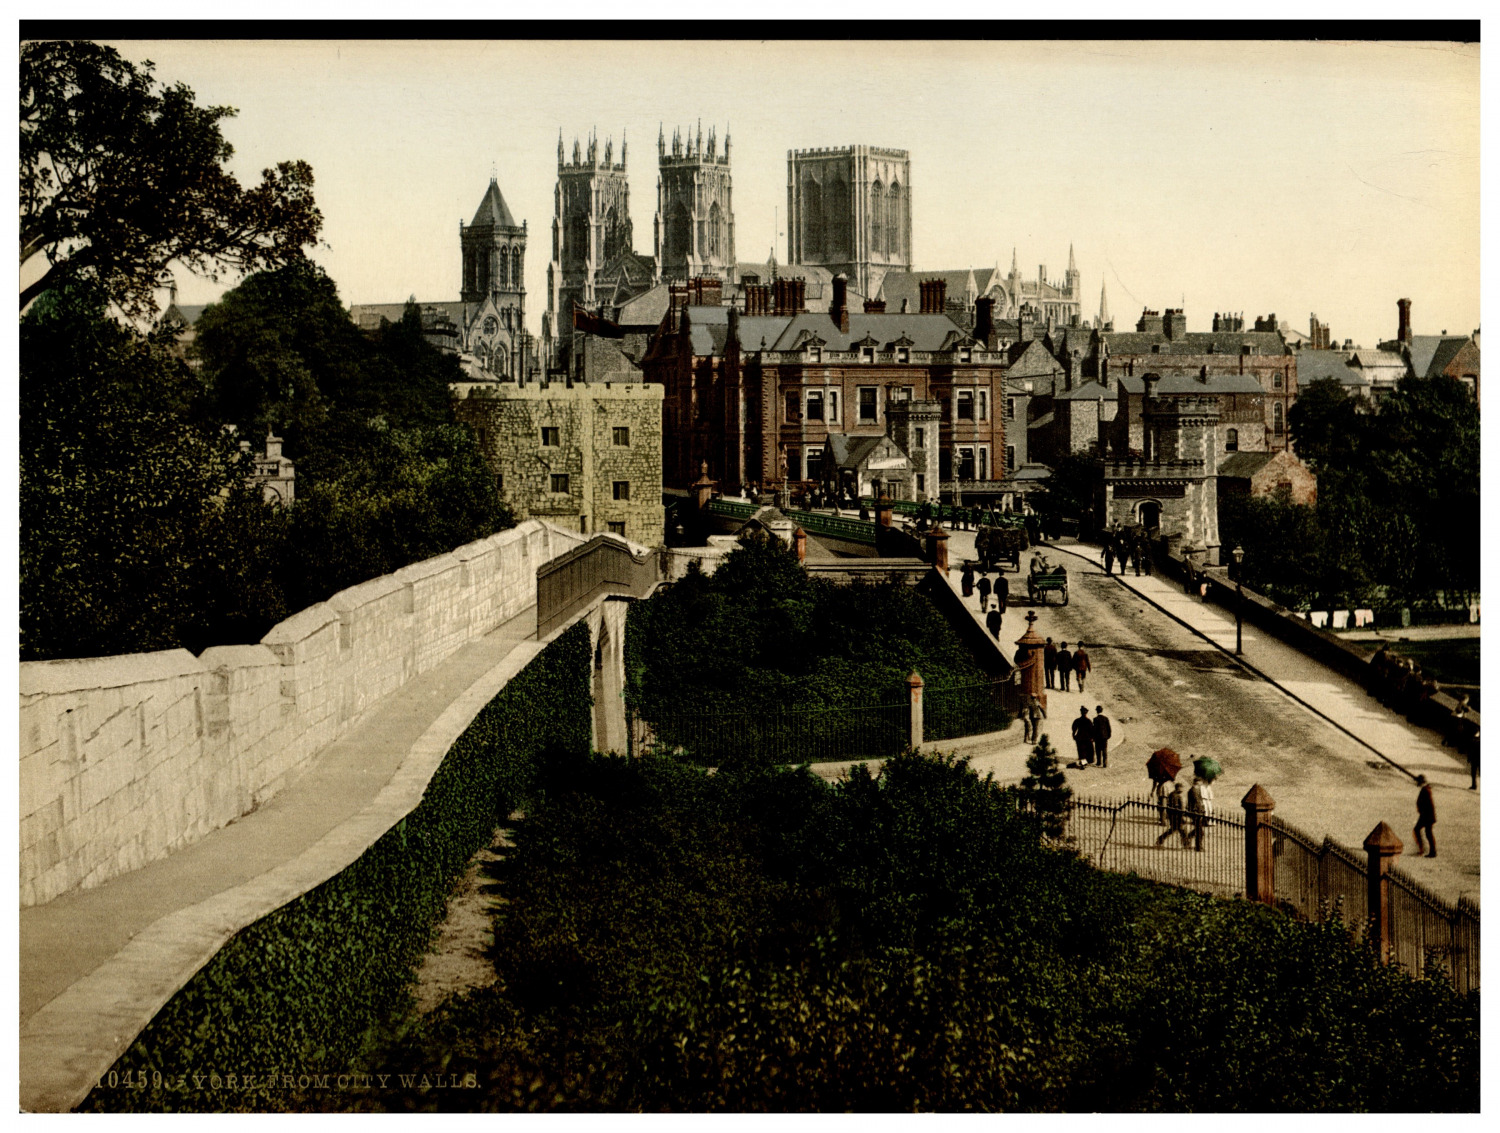 Yorkshire. York. From City Walls.  Vintage photochrome by P.Z, photochrome Zurich